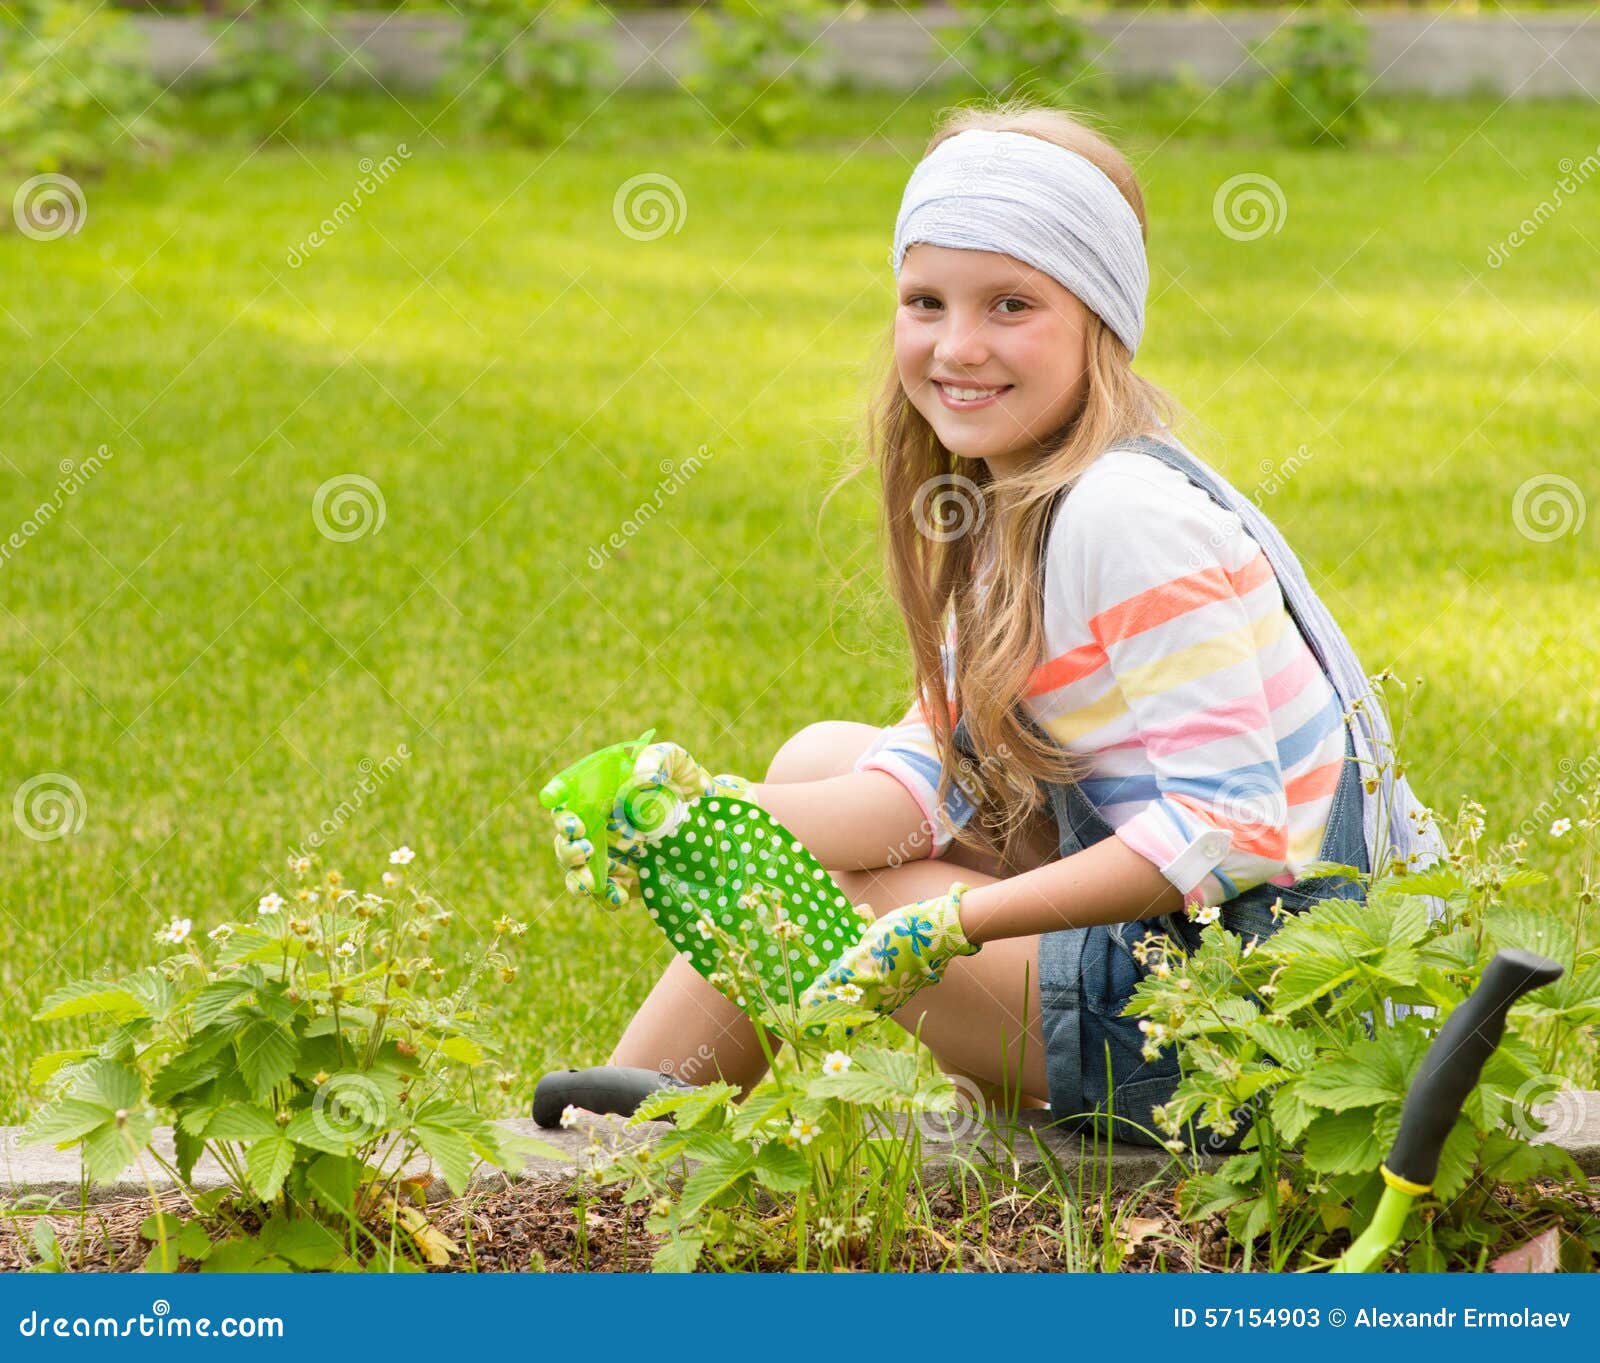 girl sprays plants in the garden